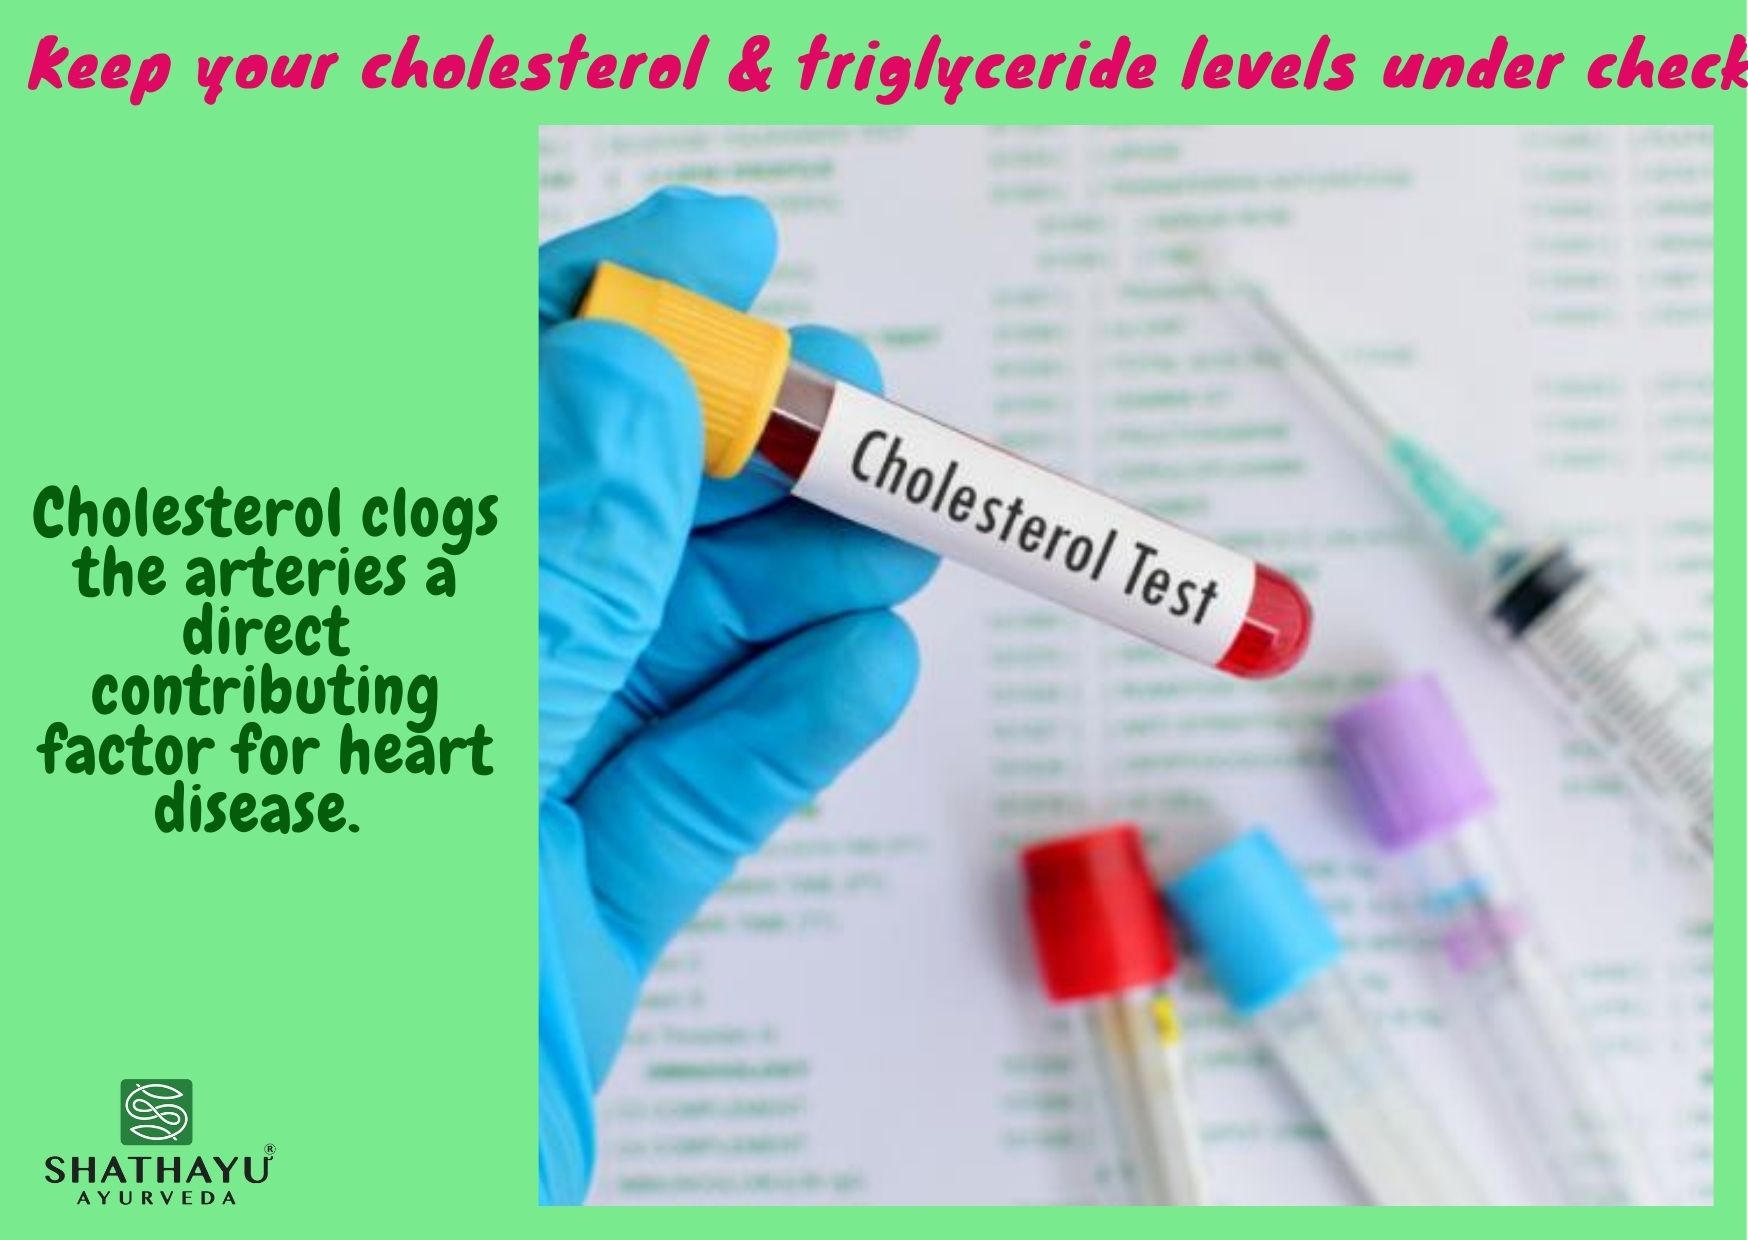 Keep blood cholesterol under check